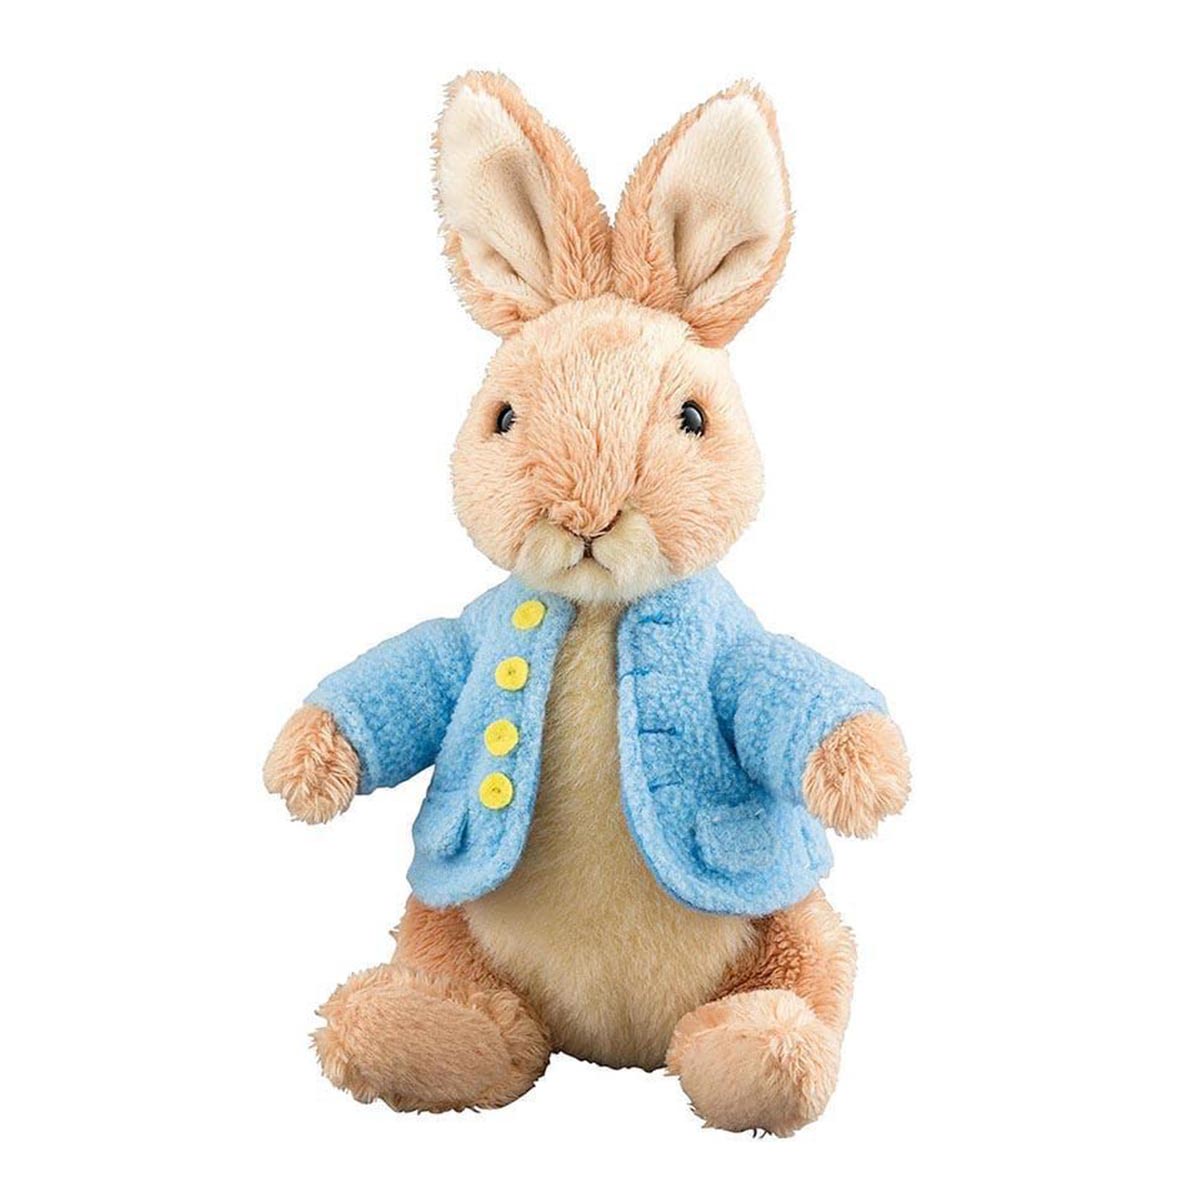 GUND Peter Rabbit Soft Toy Small